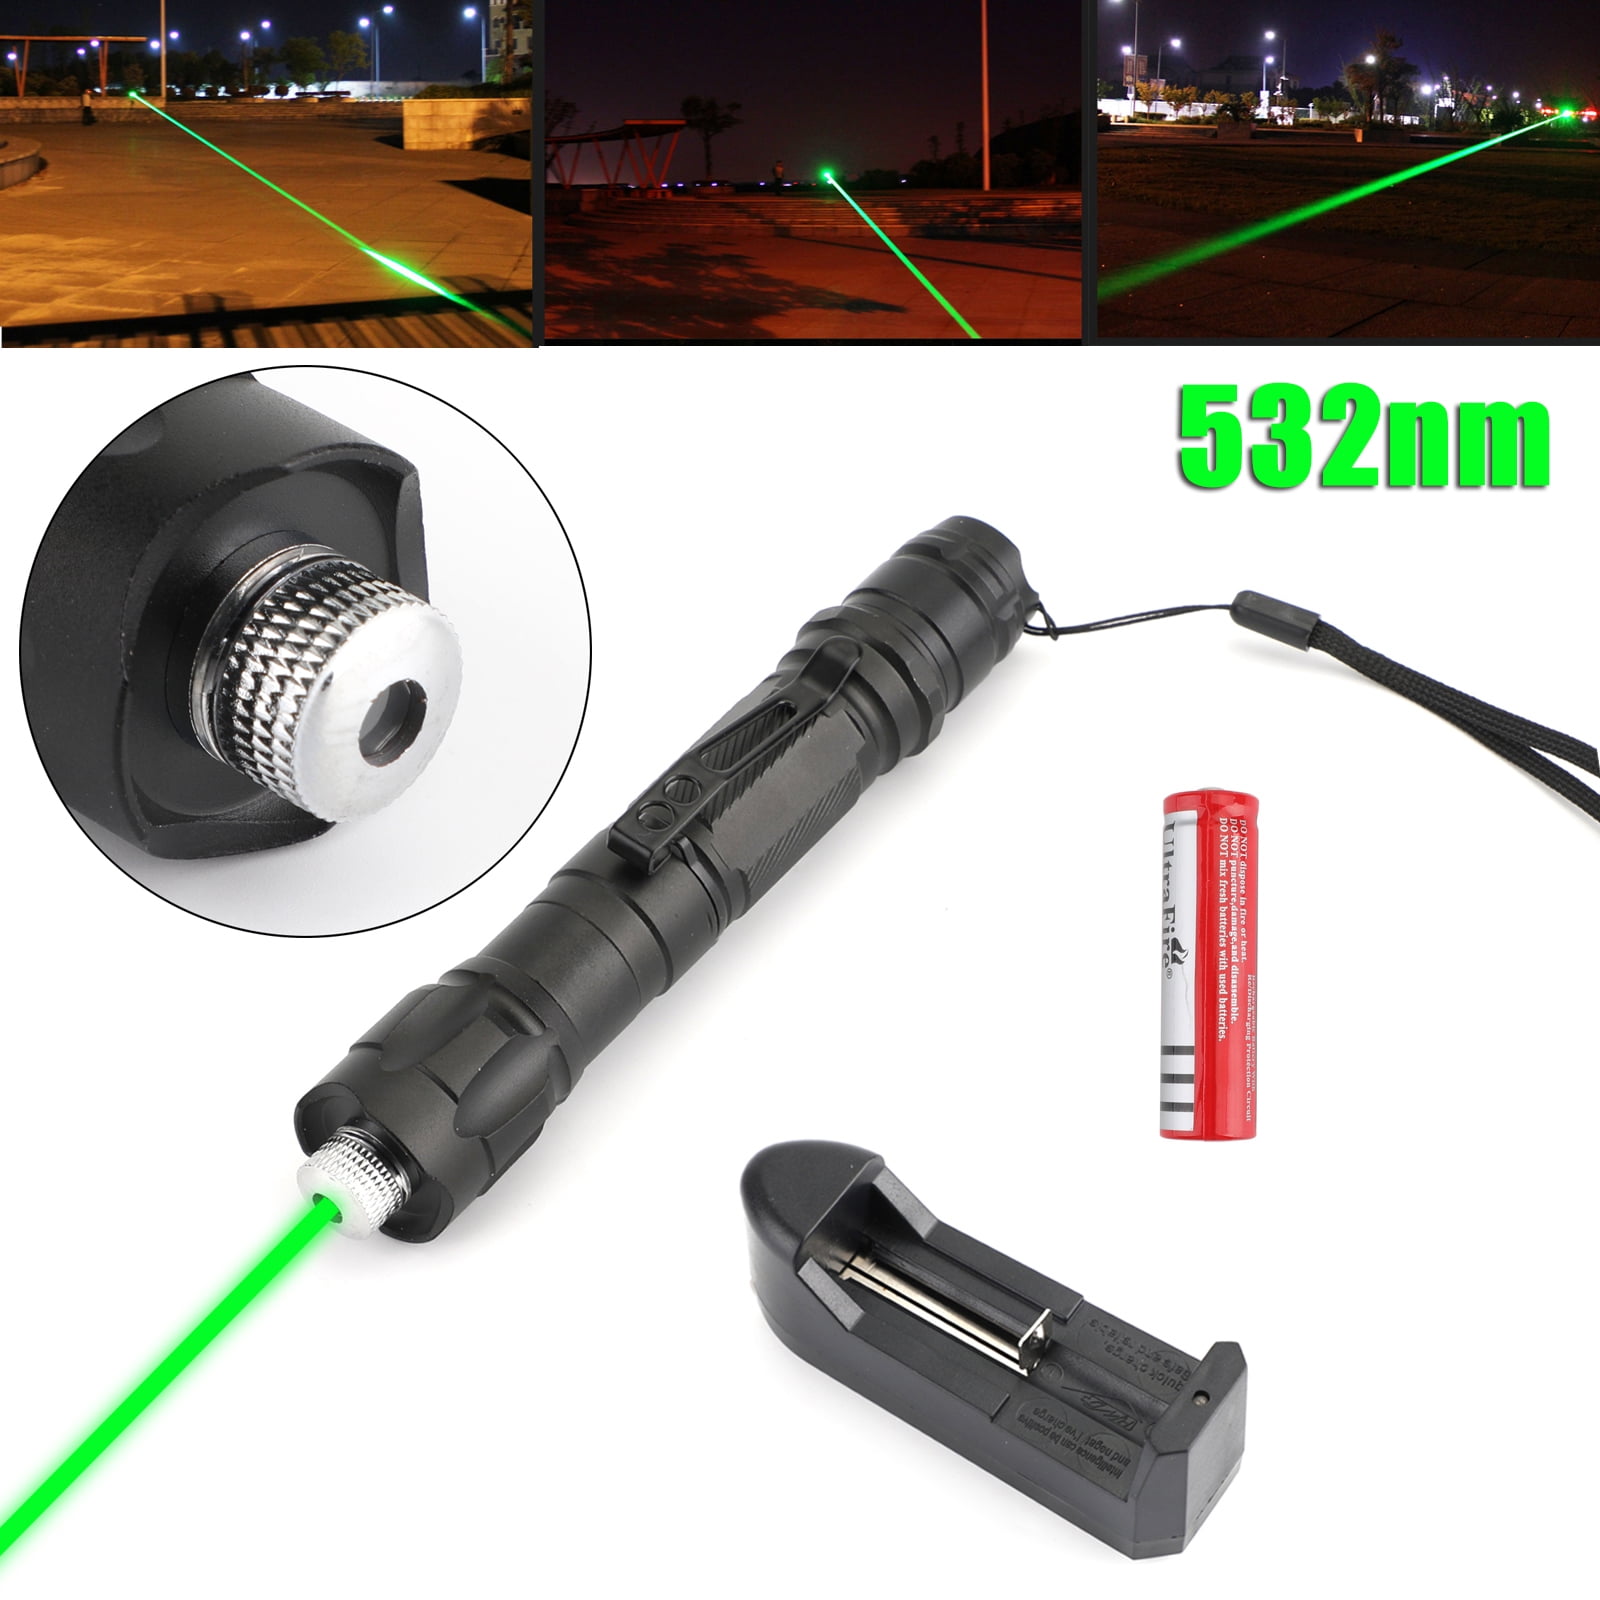 Star Cap Battery USA! High Power Green Laser Pointer Military Beam Lazer Pen 